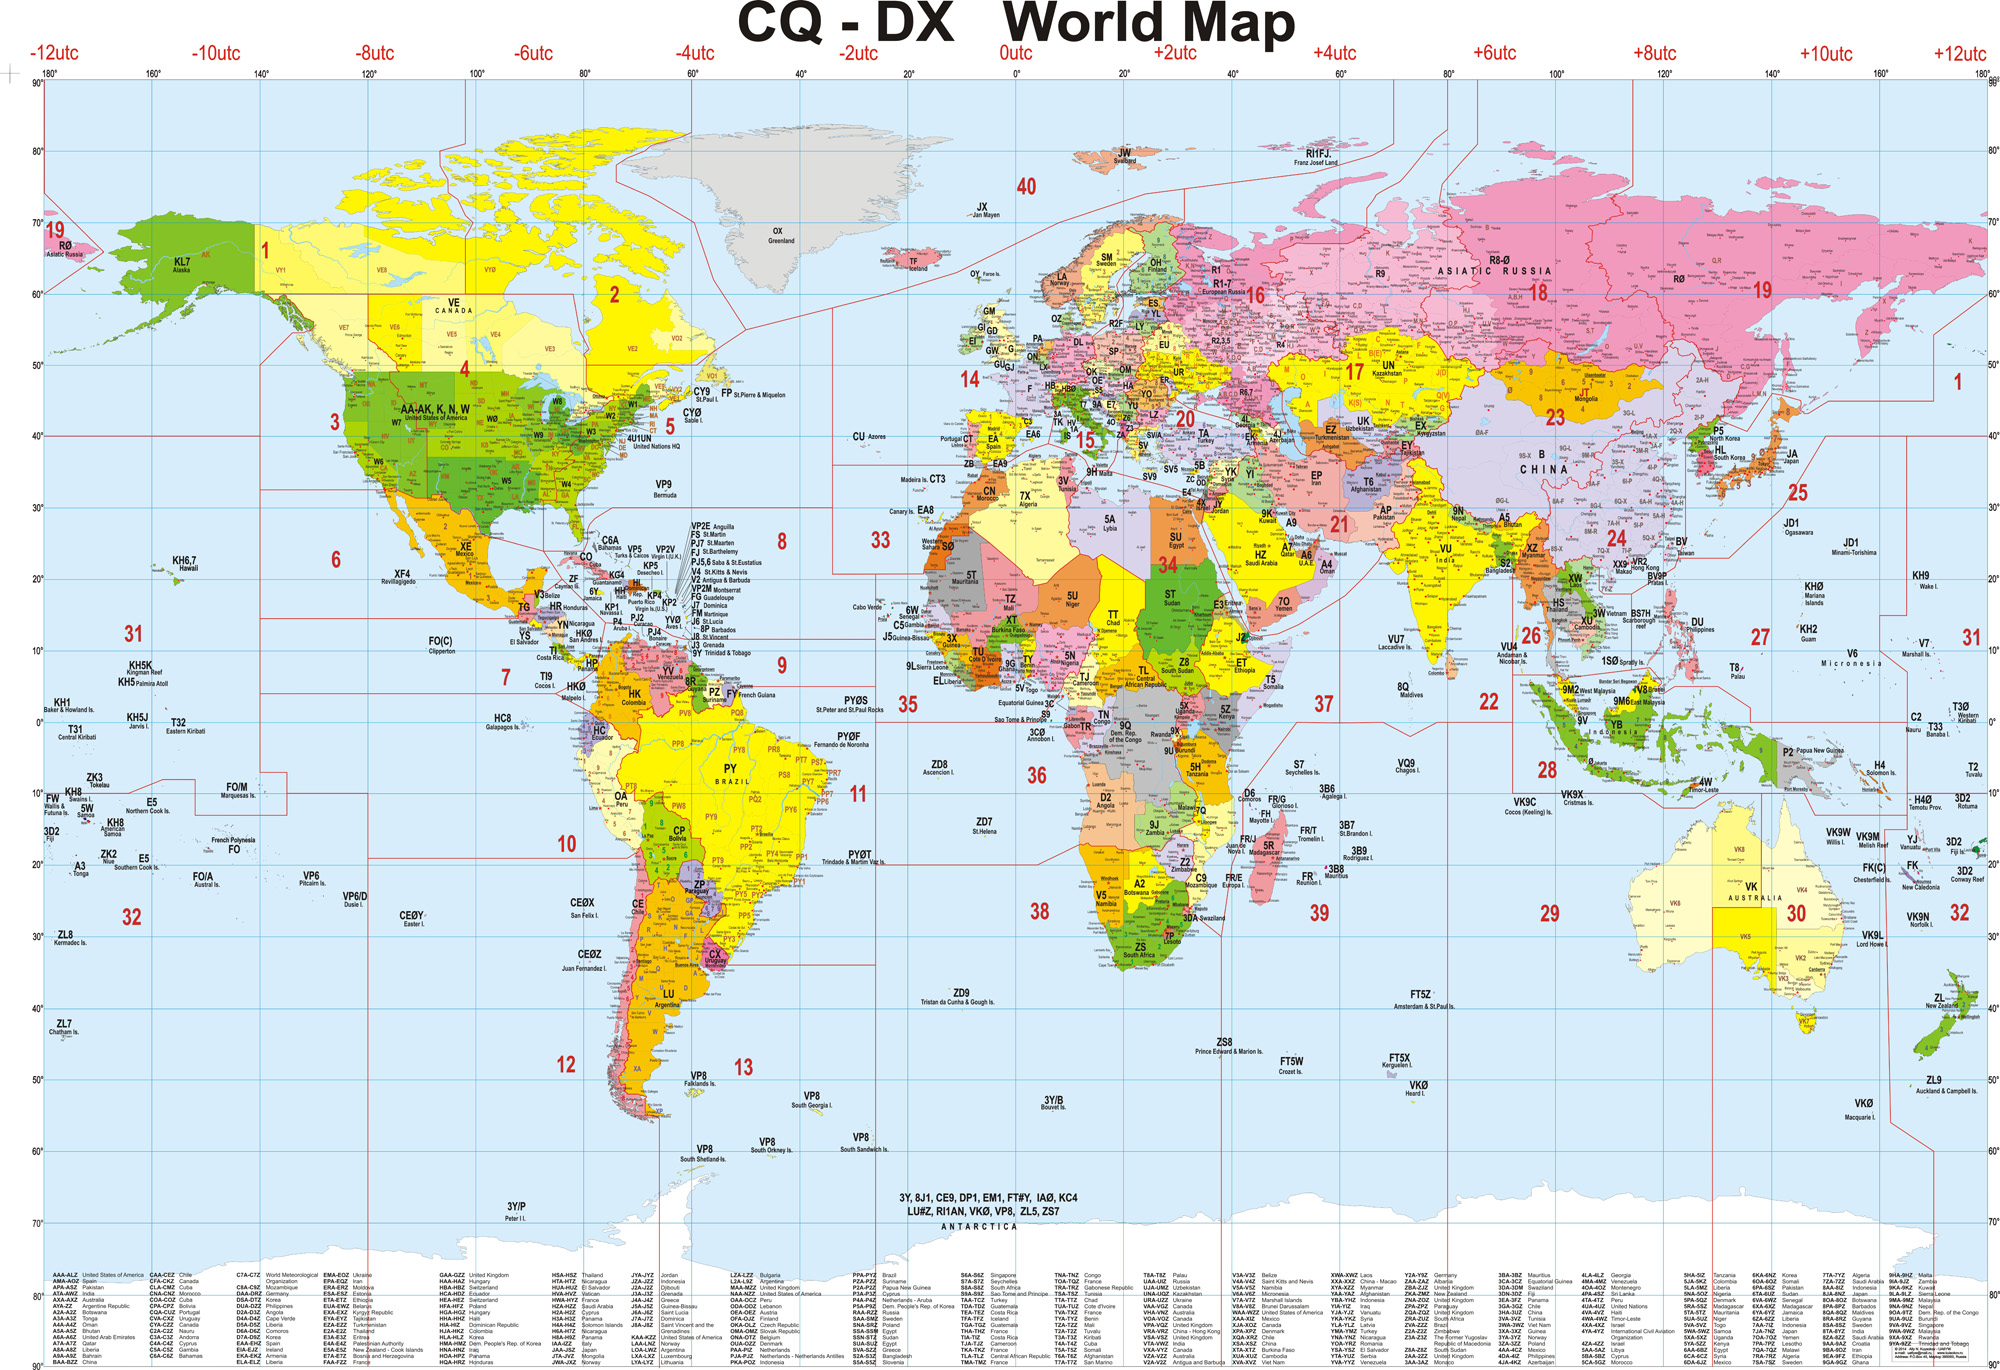 Mapa CQ-DX World Map  radioaficionados